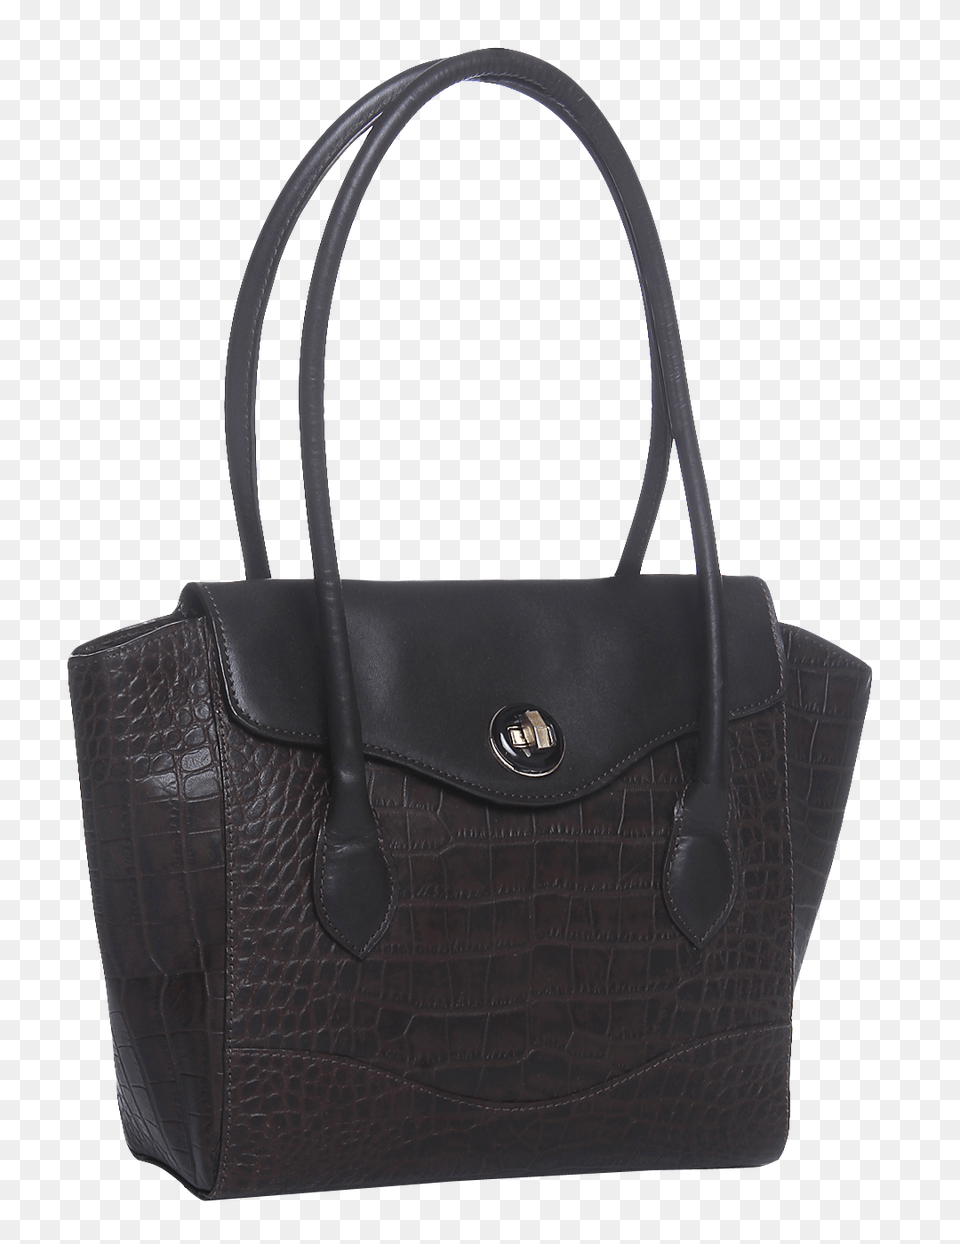 Pngpix Com Leather Handbag Accessories, Bag, Purse, Tote Bag Png Image